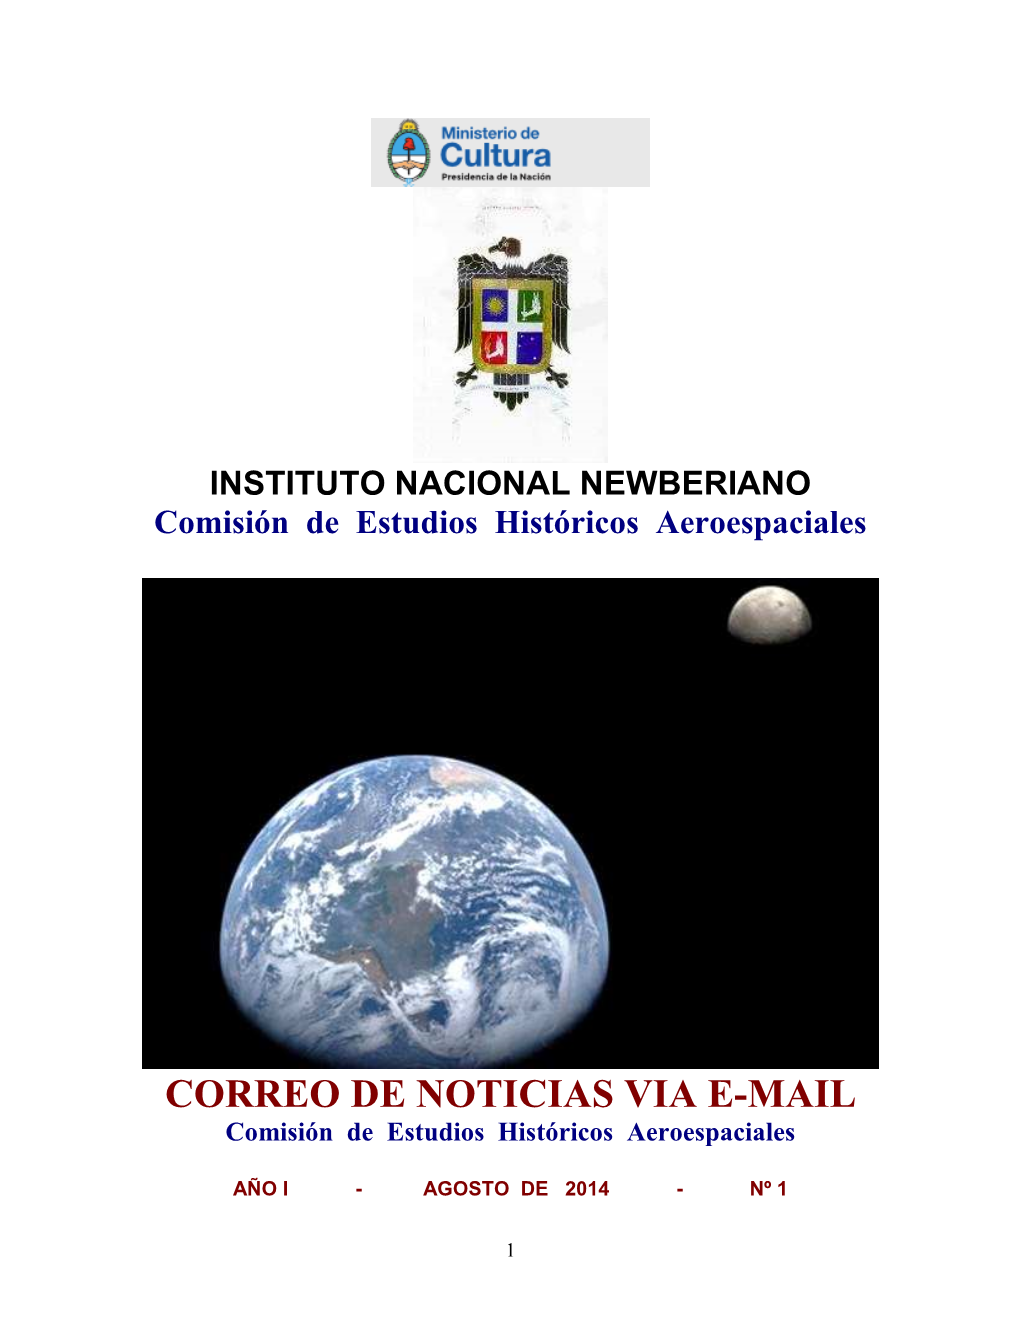 CORREO DE NOTICIAS VIA E-MAIL Comisión De Estudios Históricos Aeroespaciales